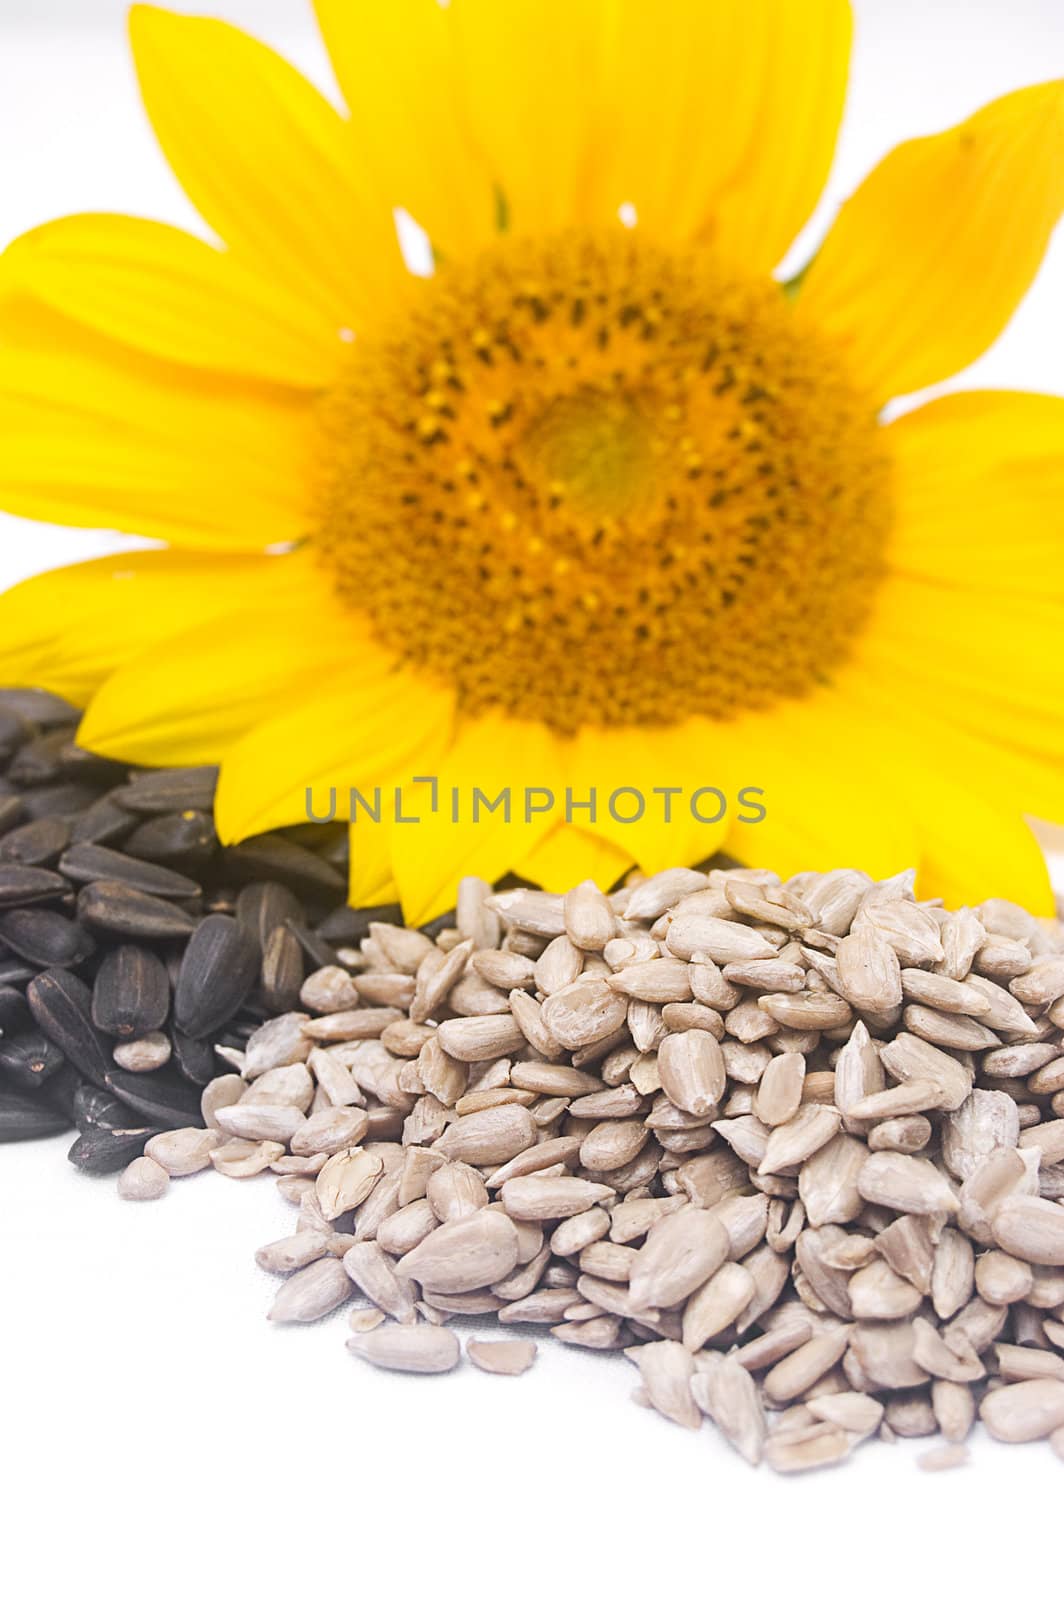 Sunflower, black seeds andwhite kernels